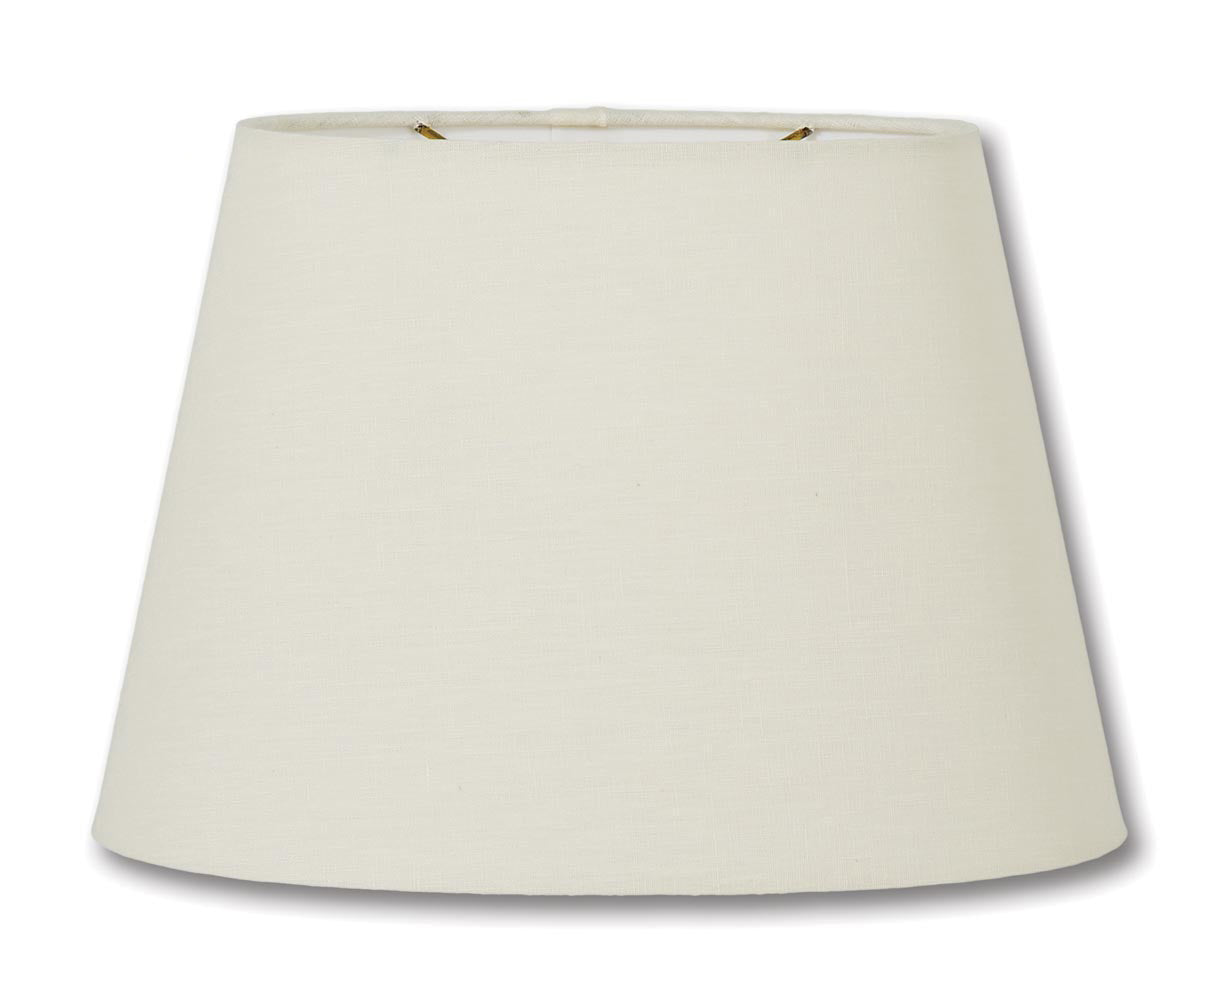 Oval Hardback Lamp Shades - Eggshell Color, 100% Fine Linen Material